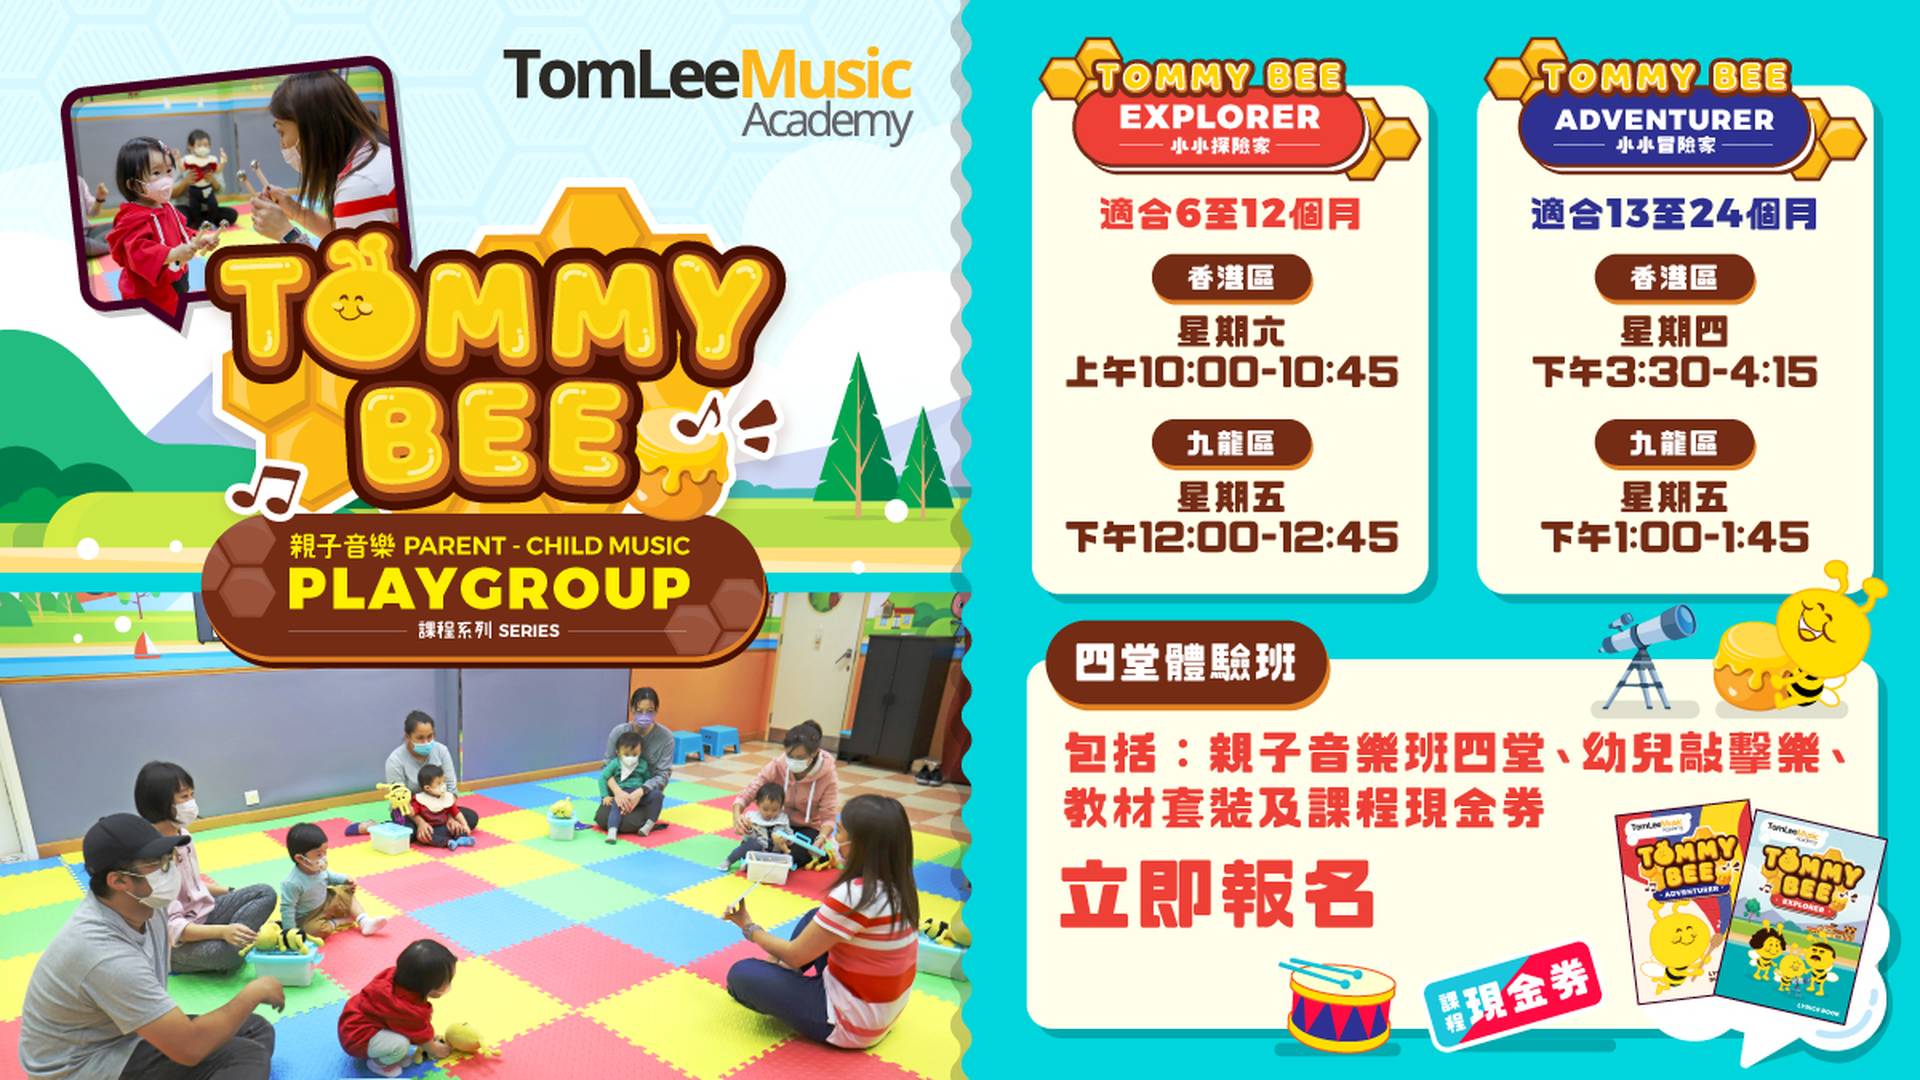 TOMMY BEE 親子 PLAYGROUP 課程 (6-24個月)  | 通利音樂藝術中心